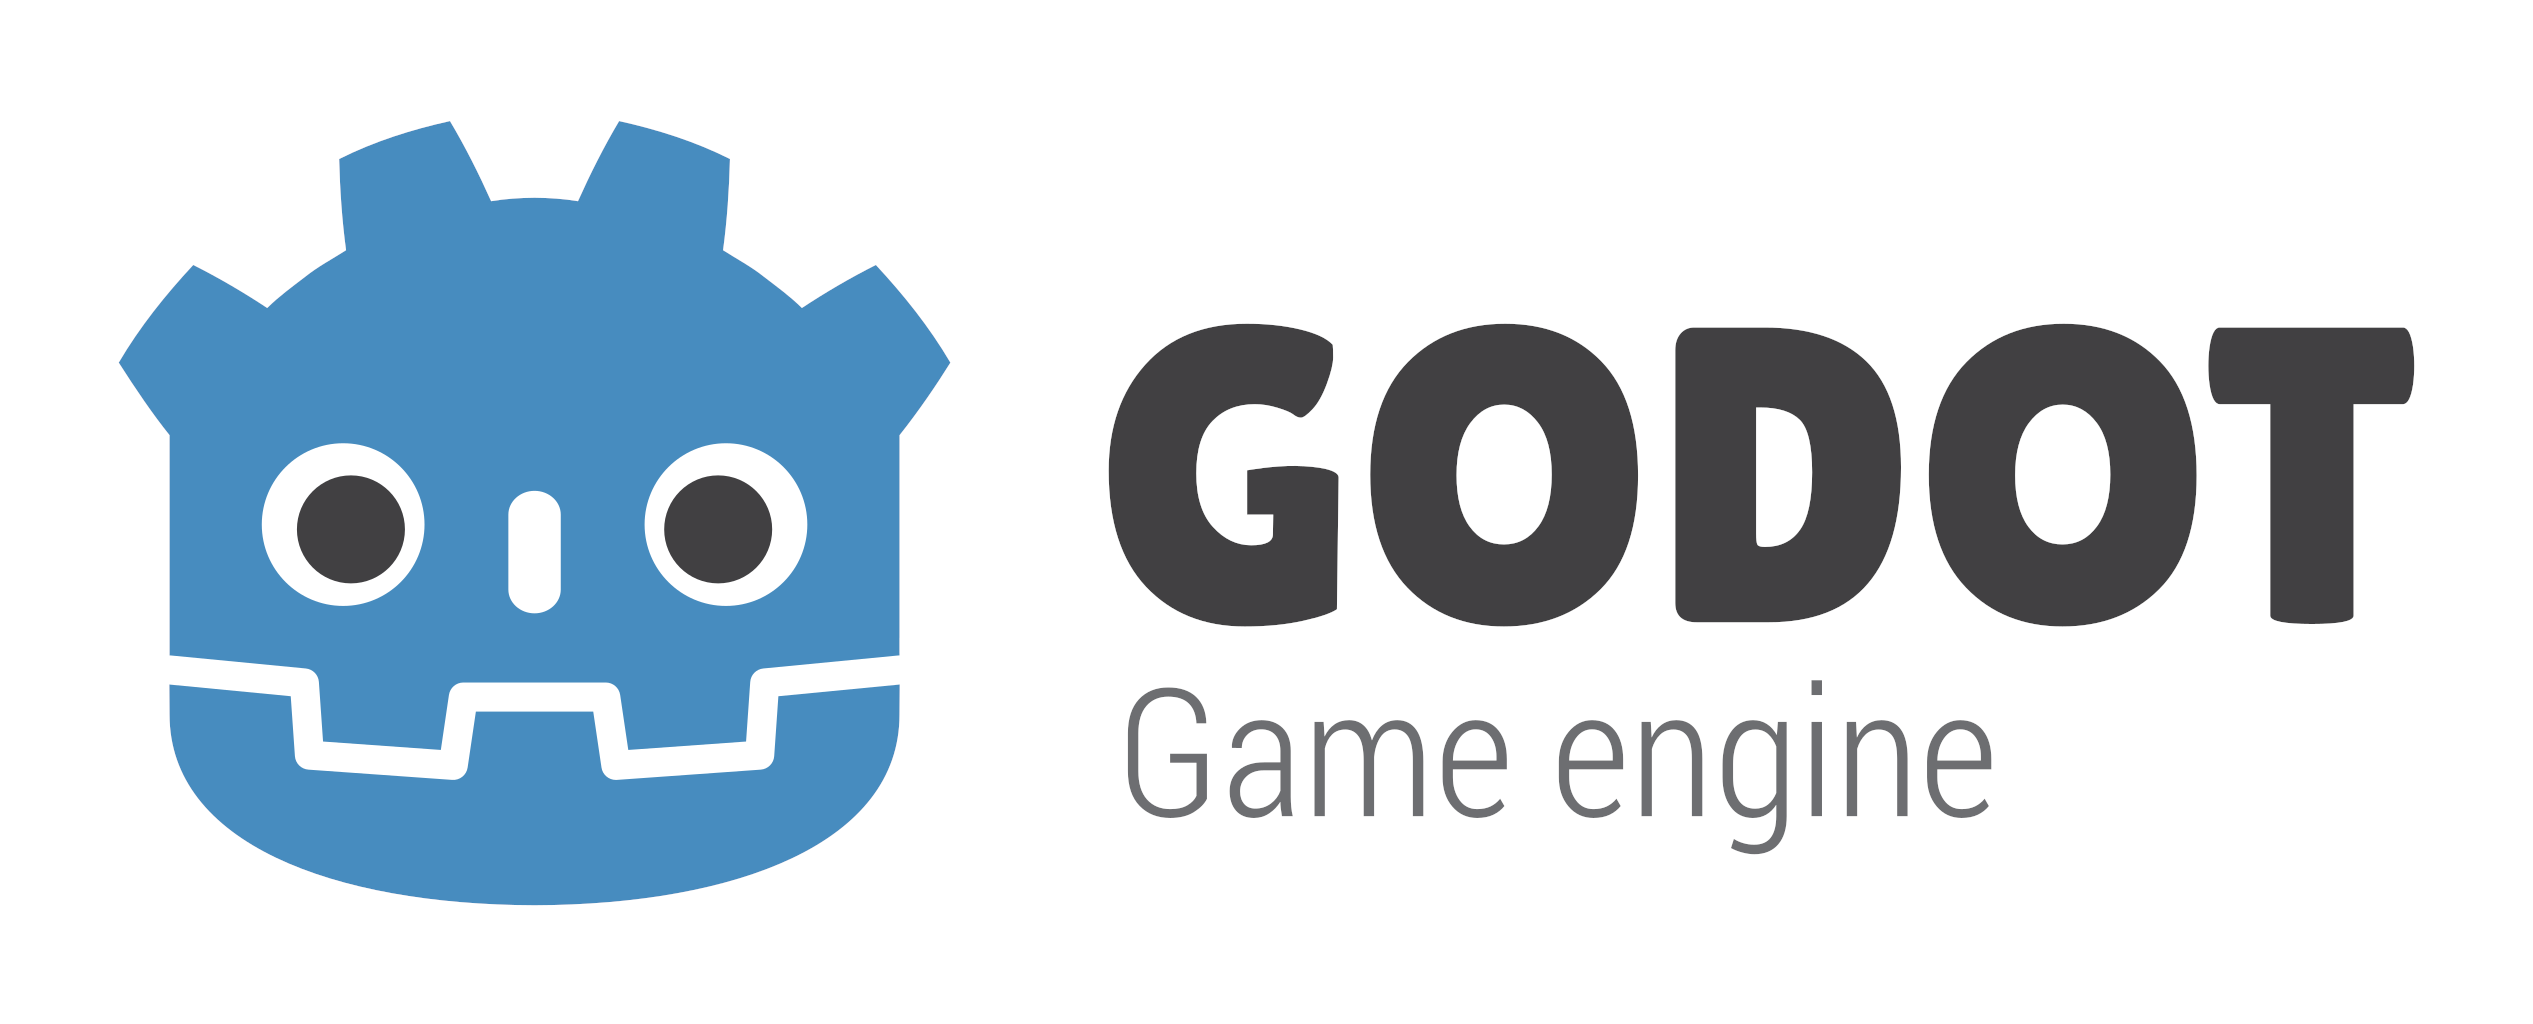 Godot Engine logo